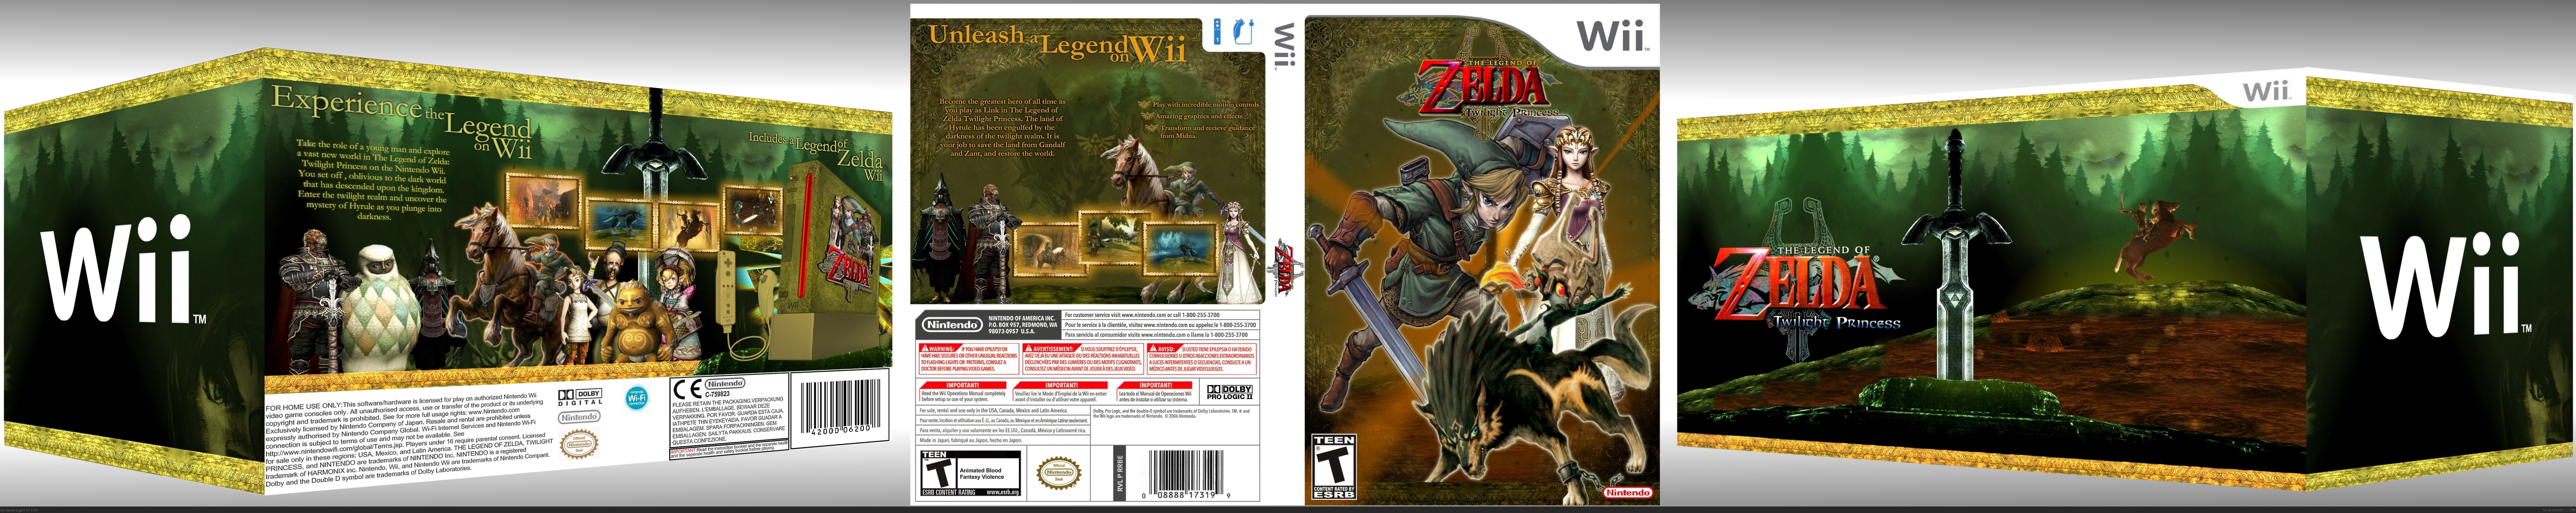 The Legend of Zelda Twilight Princess Bundle box cover